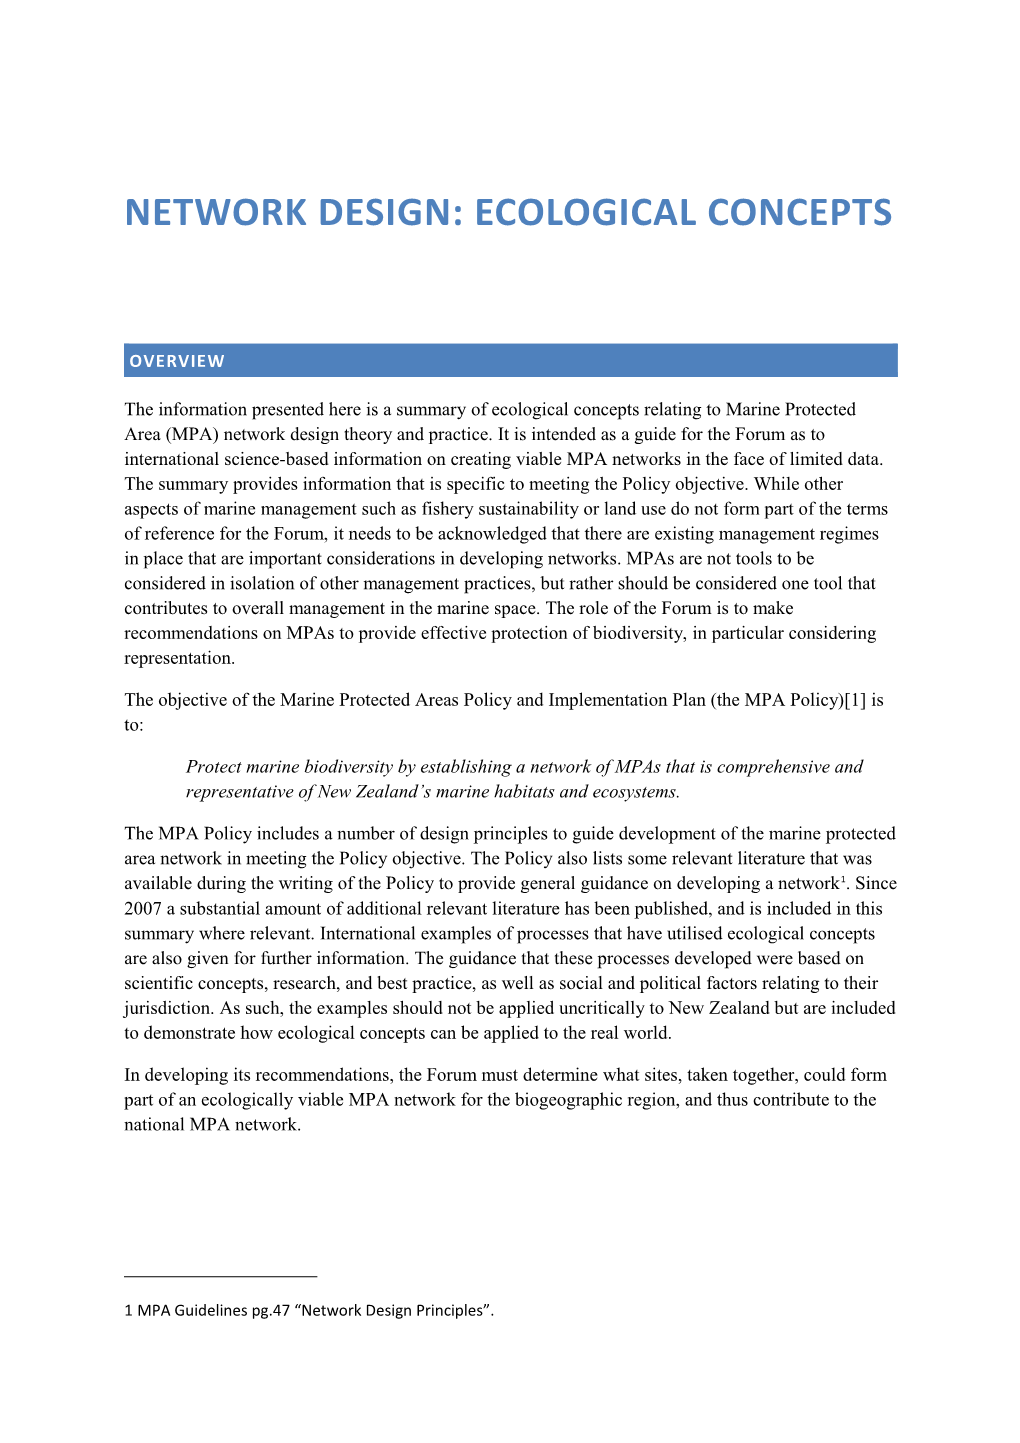 Network Design: Ecological Concepts